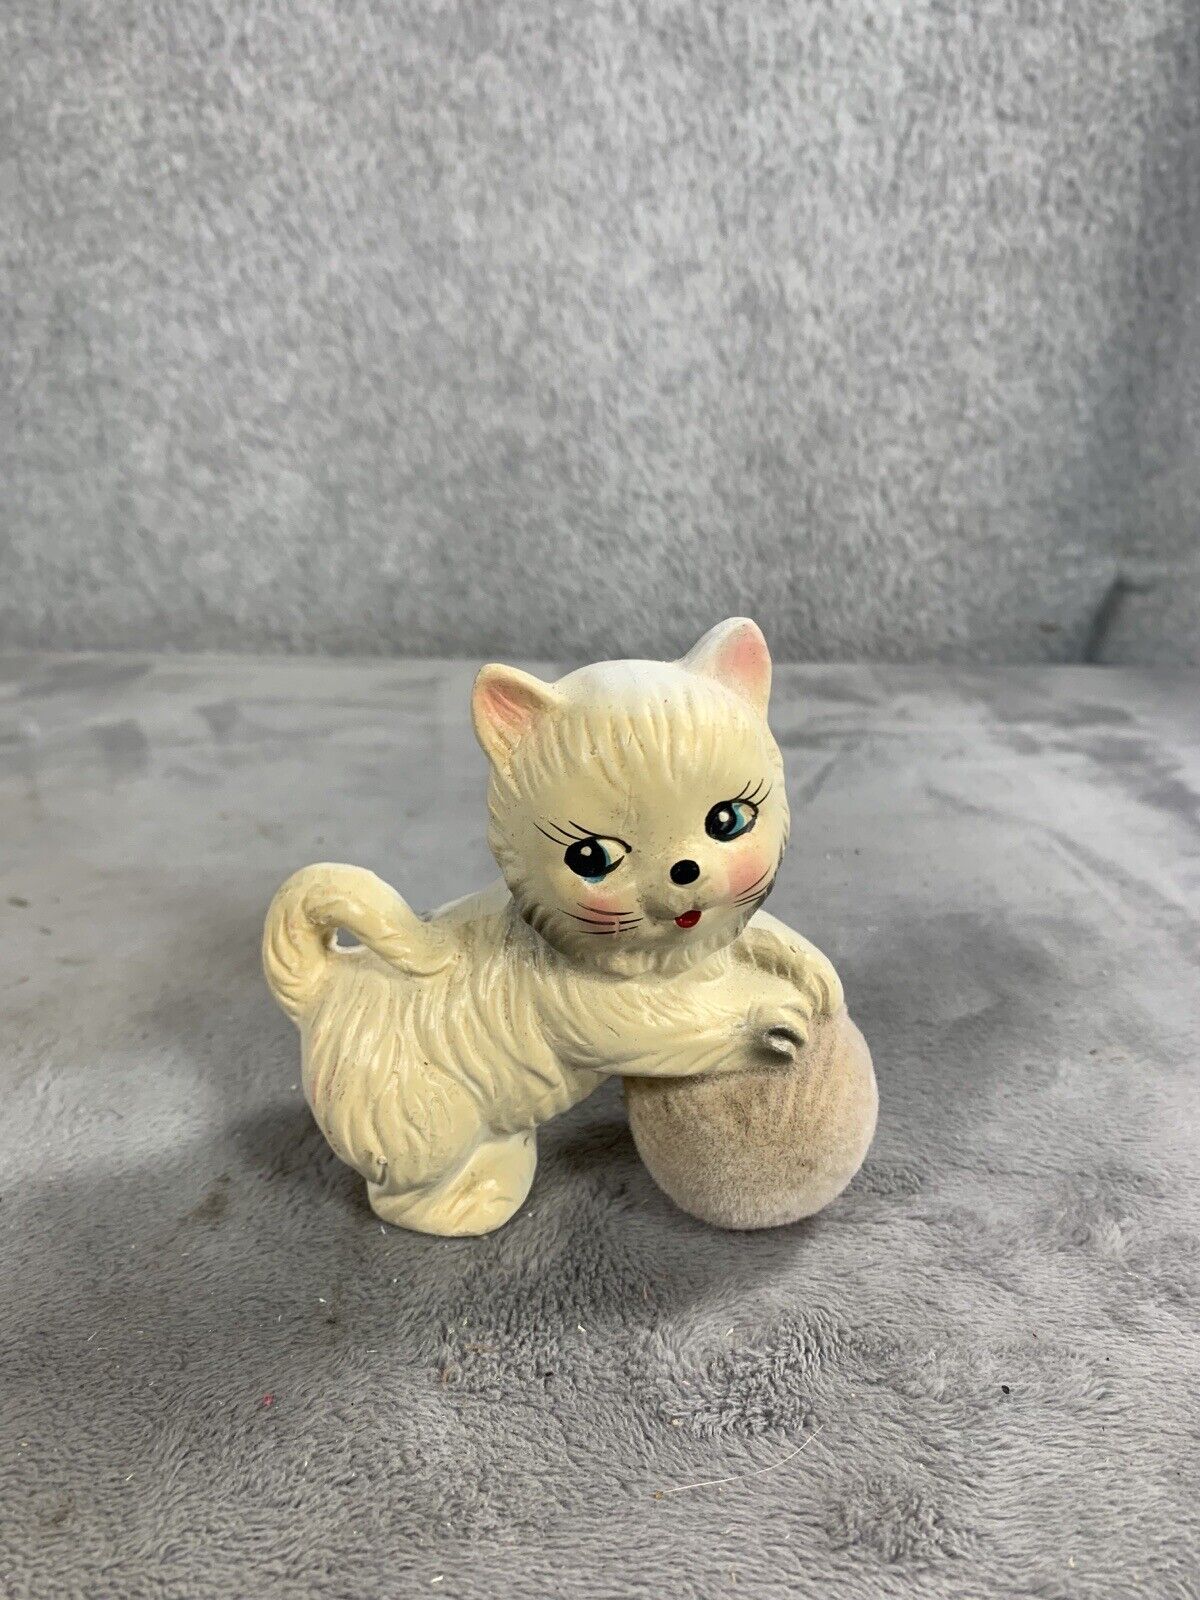 Vintage White Ceramic Kitten on Ball of Yarn Handpainted Figurine, Made in Japan